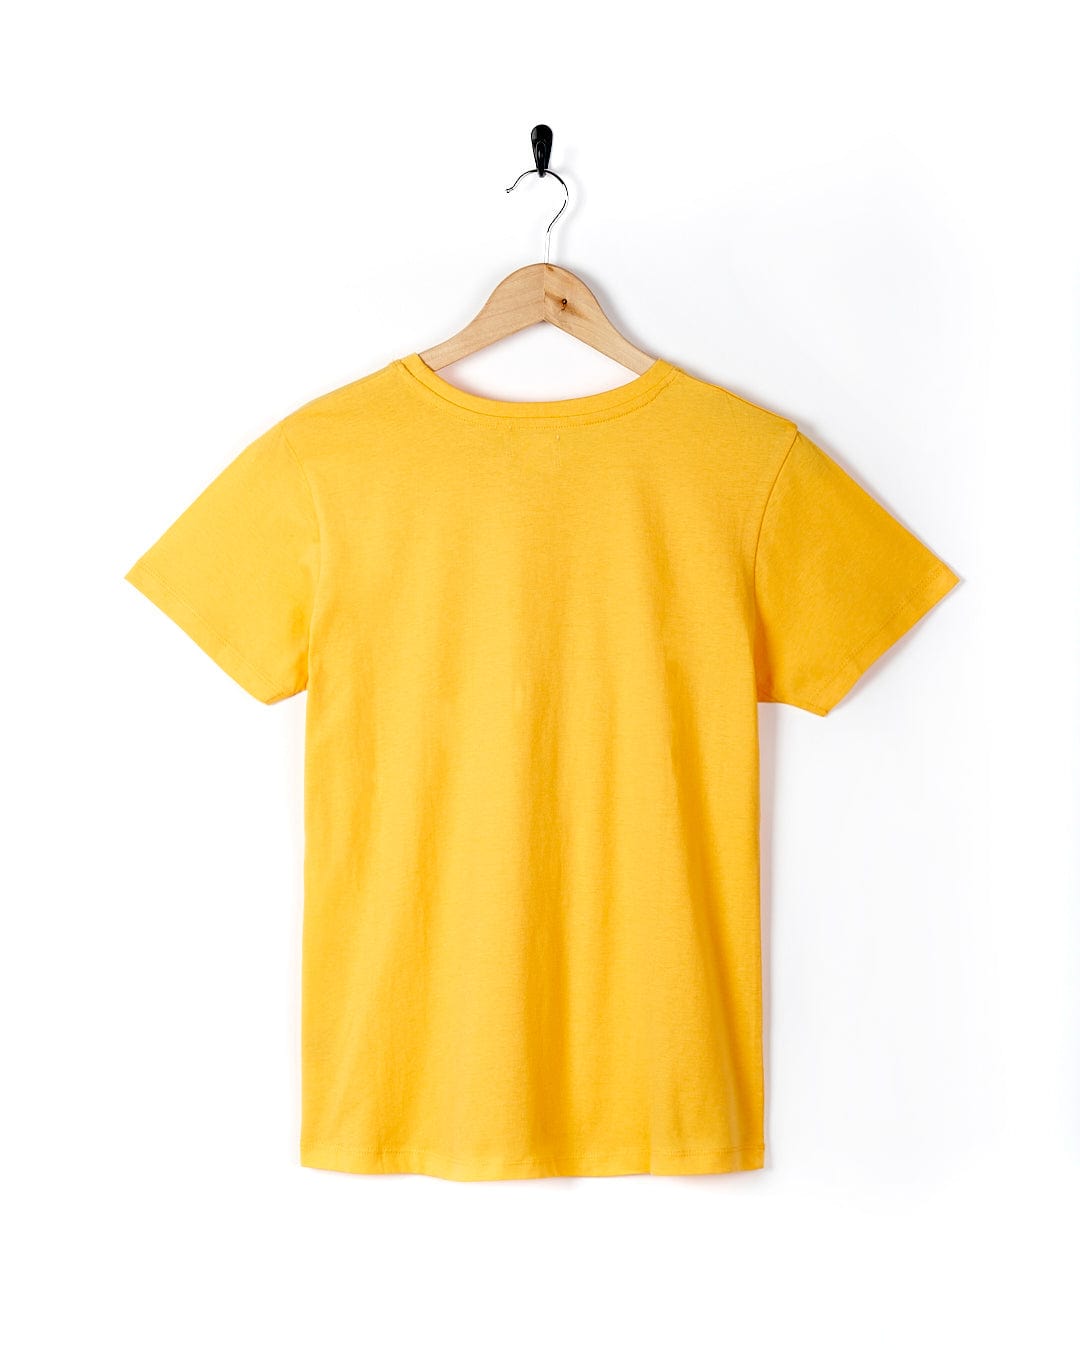 A Saltrock On The Road Devon - Womens Short Sleeve T-Shirt - Yellow hanging on a hanger.